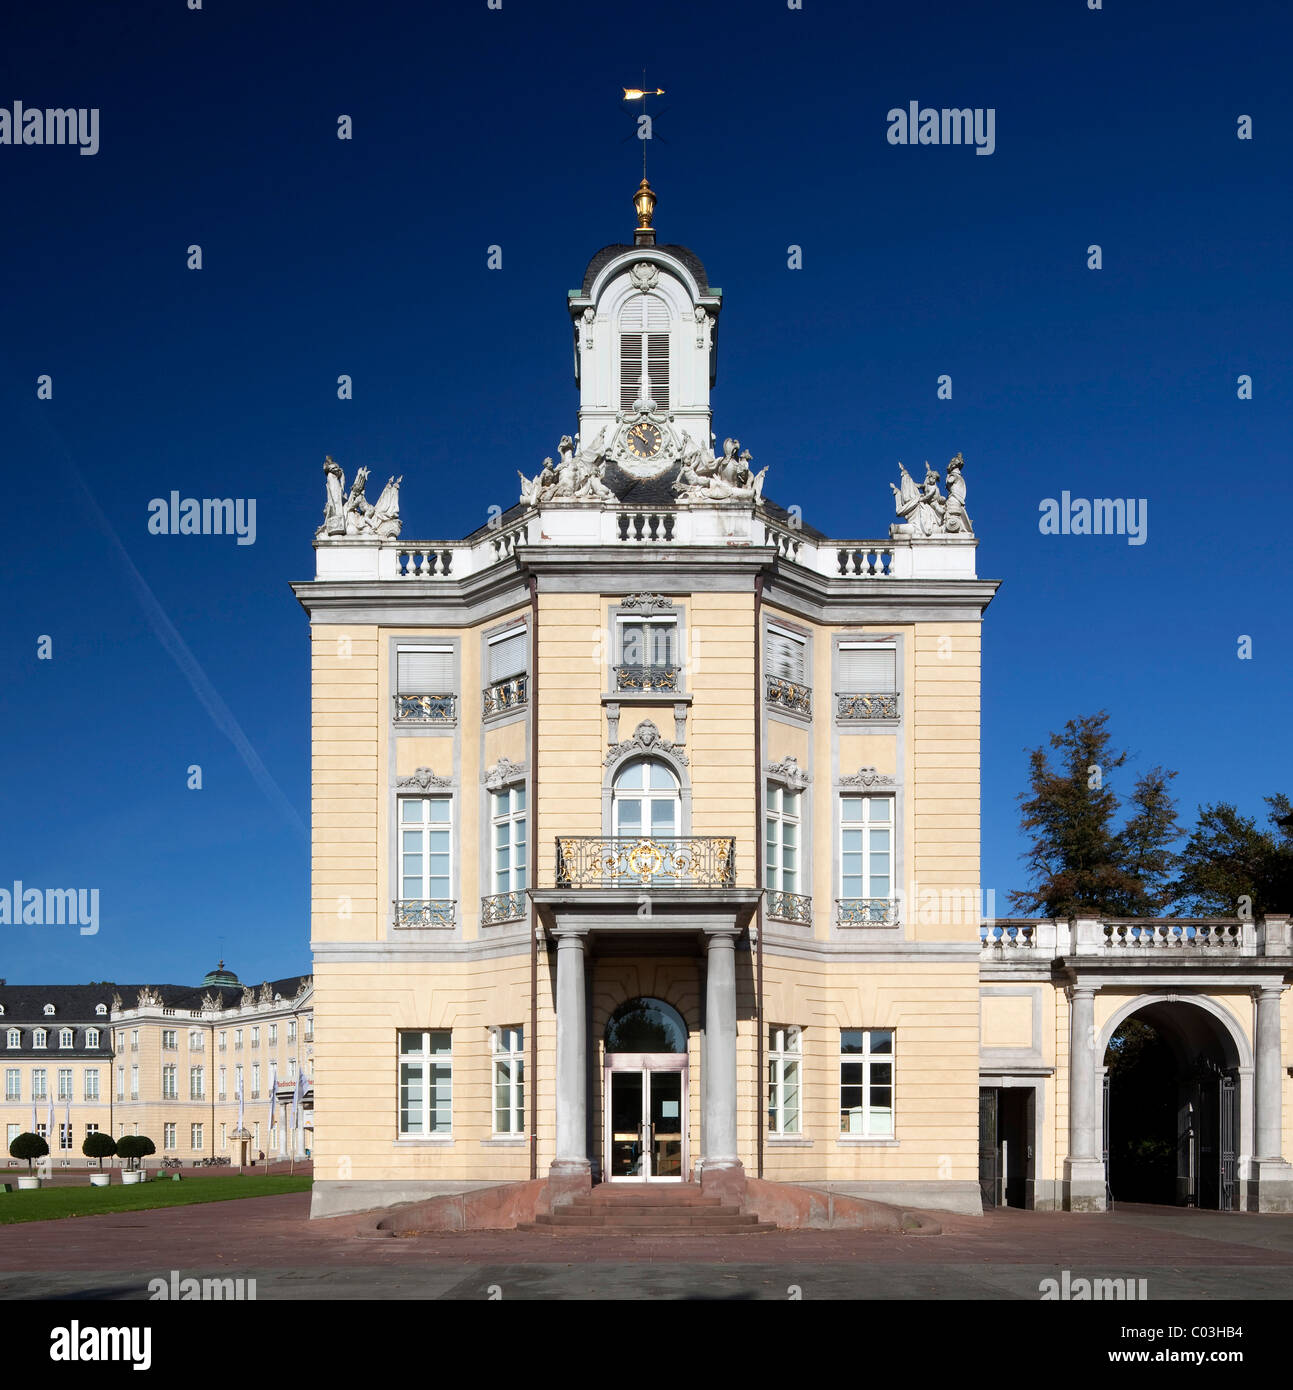 Schloss castello di Karlsruhe, Karlsruhe, Baden-Wuerttemberg, Germania, Europa Foto Stock